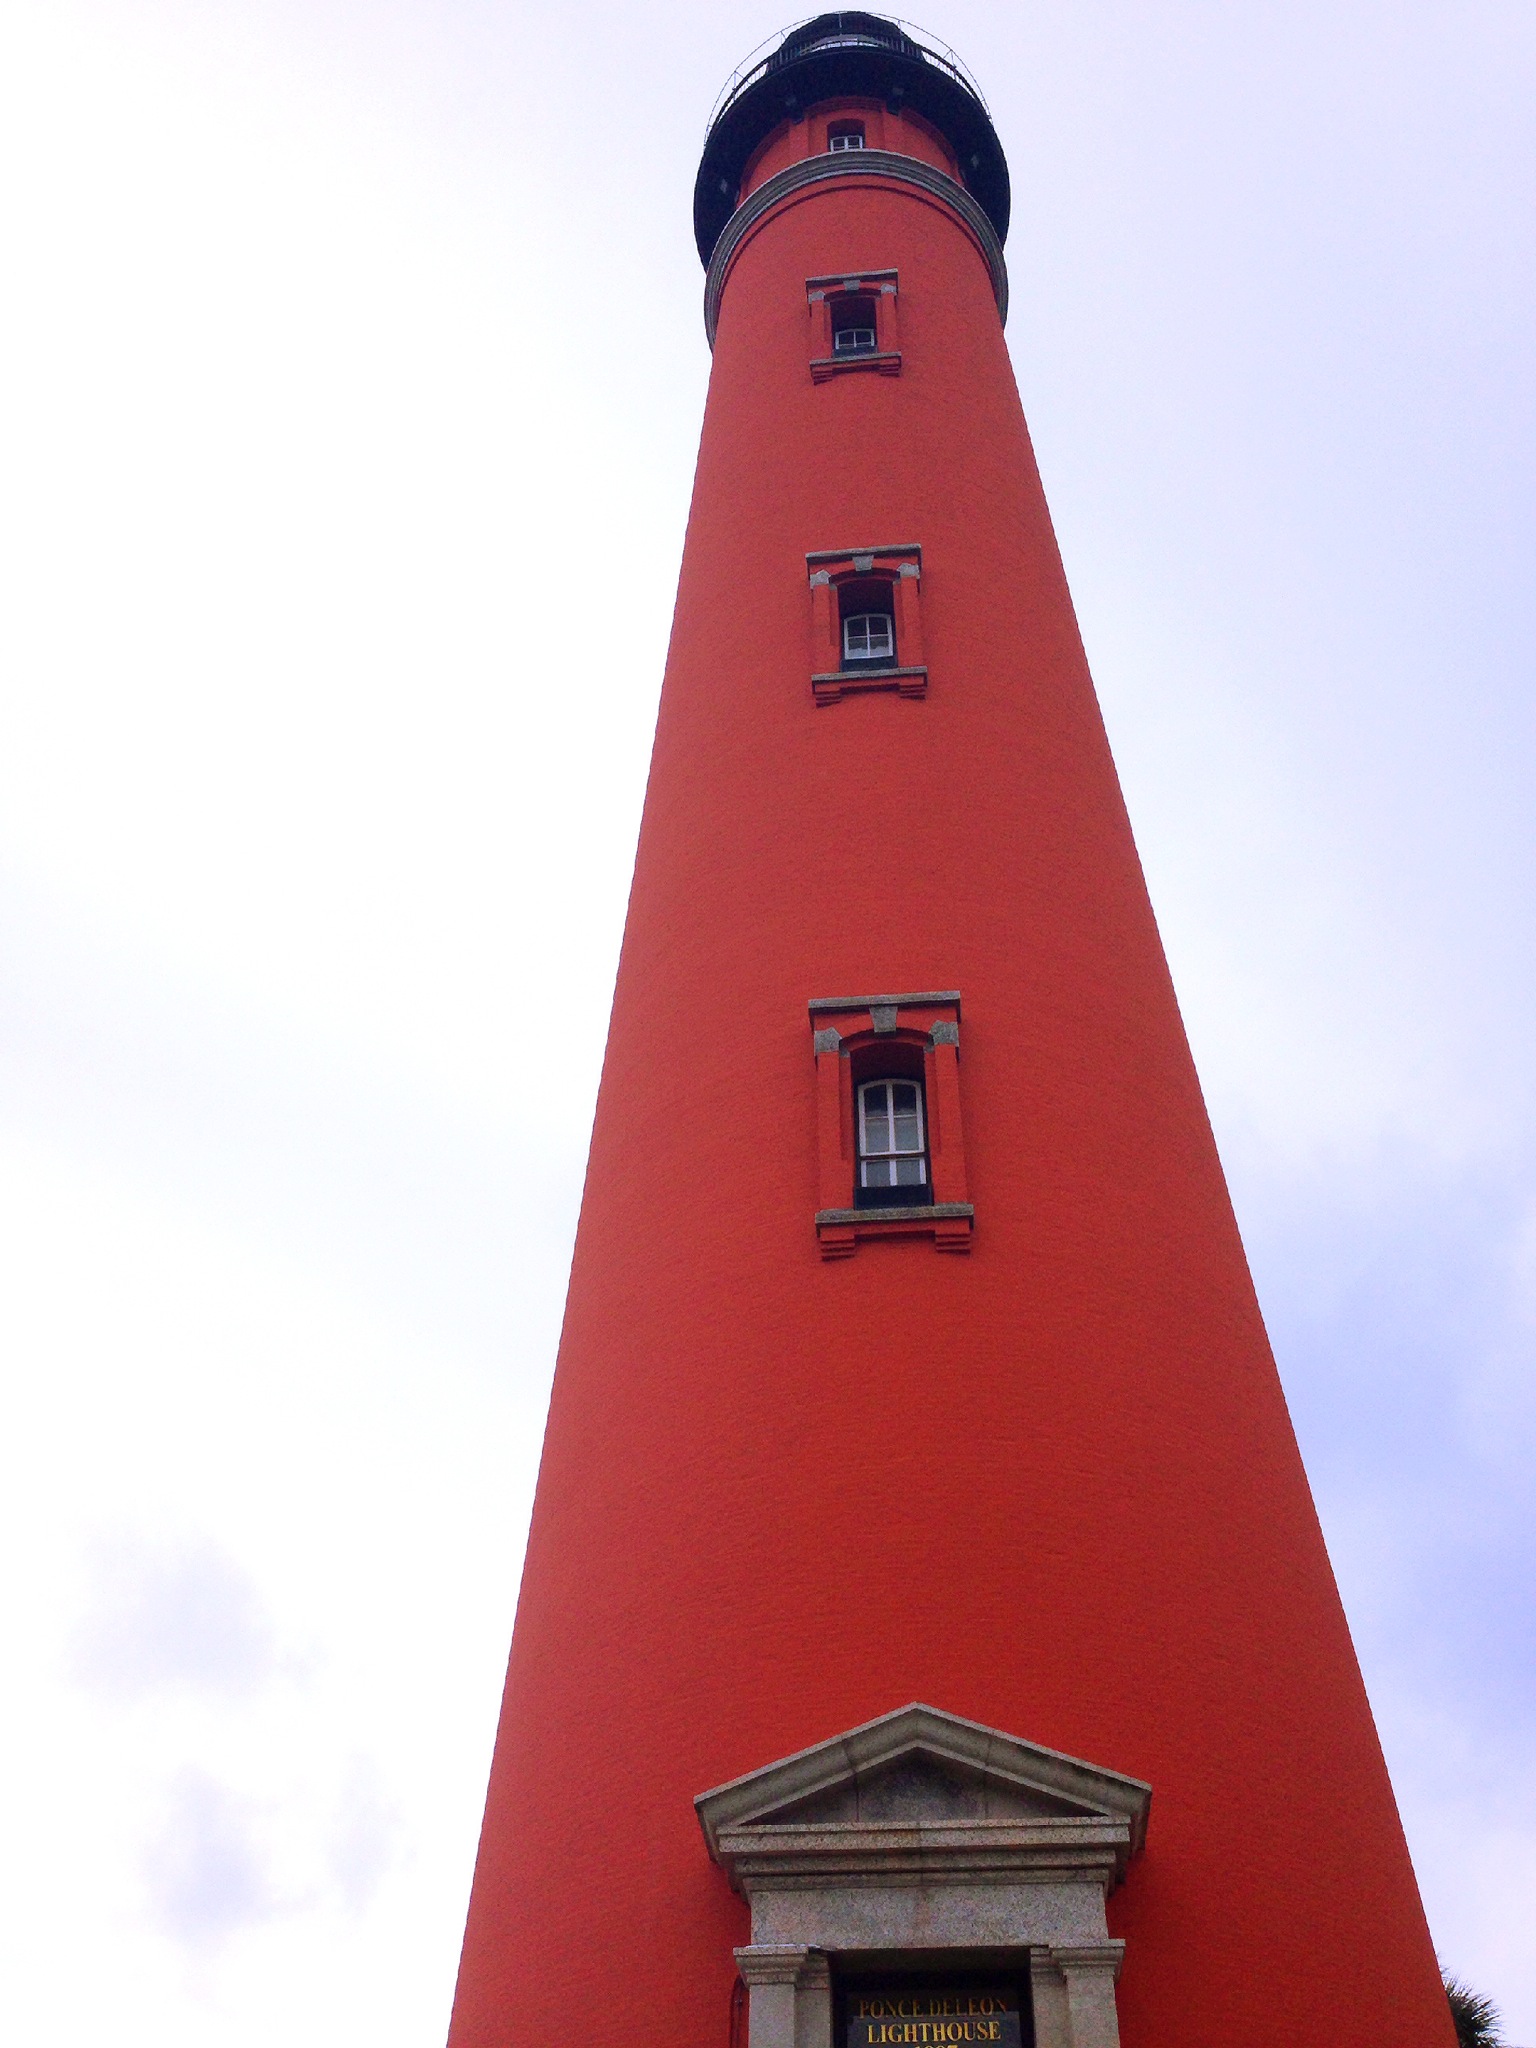 Kids on Vacation: Ponce de Leon Inlet Lighthouse (Daytona Beach Florida)